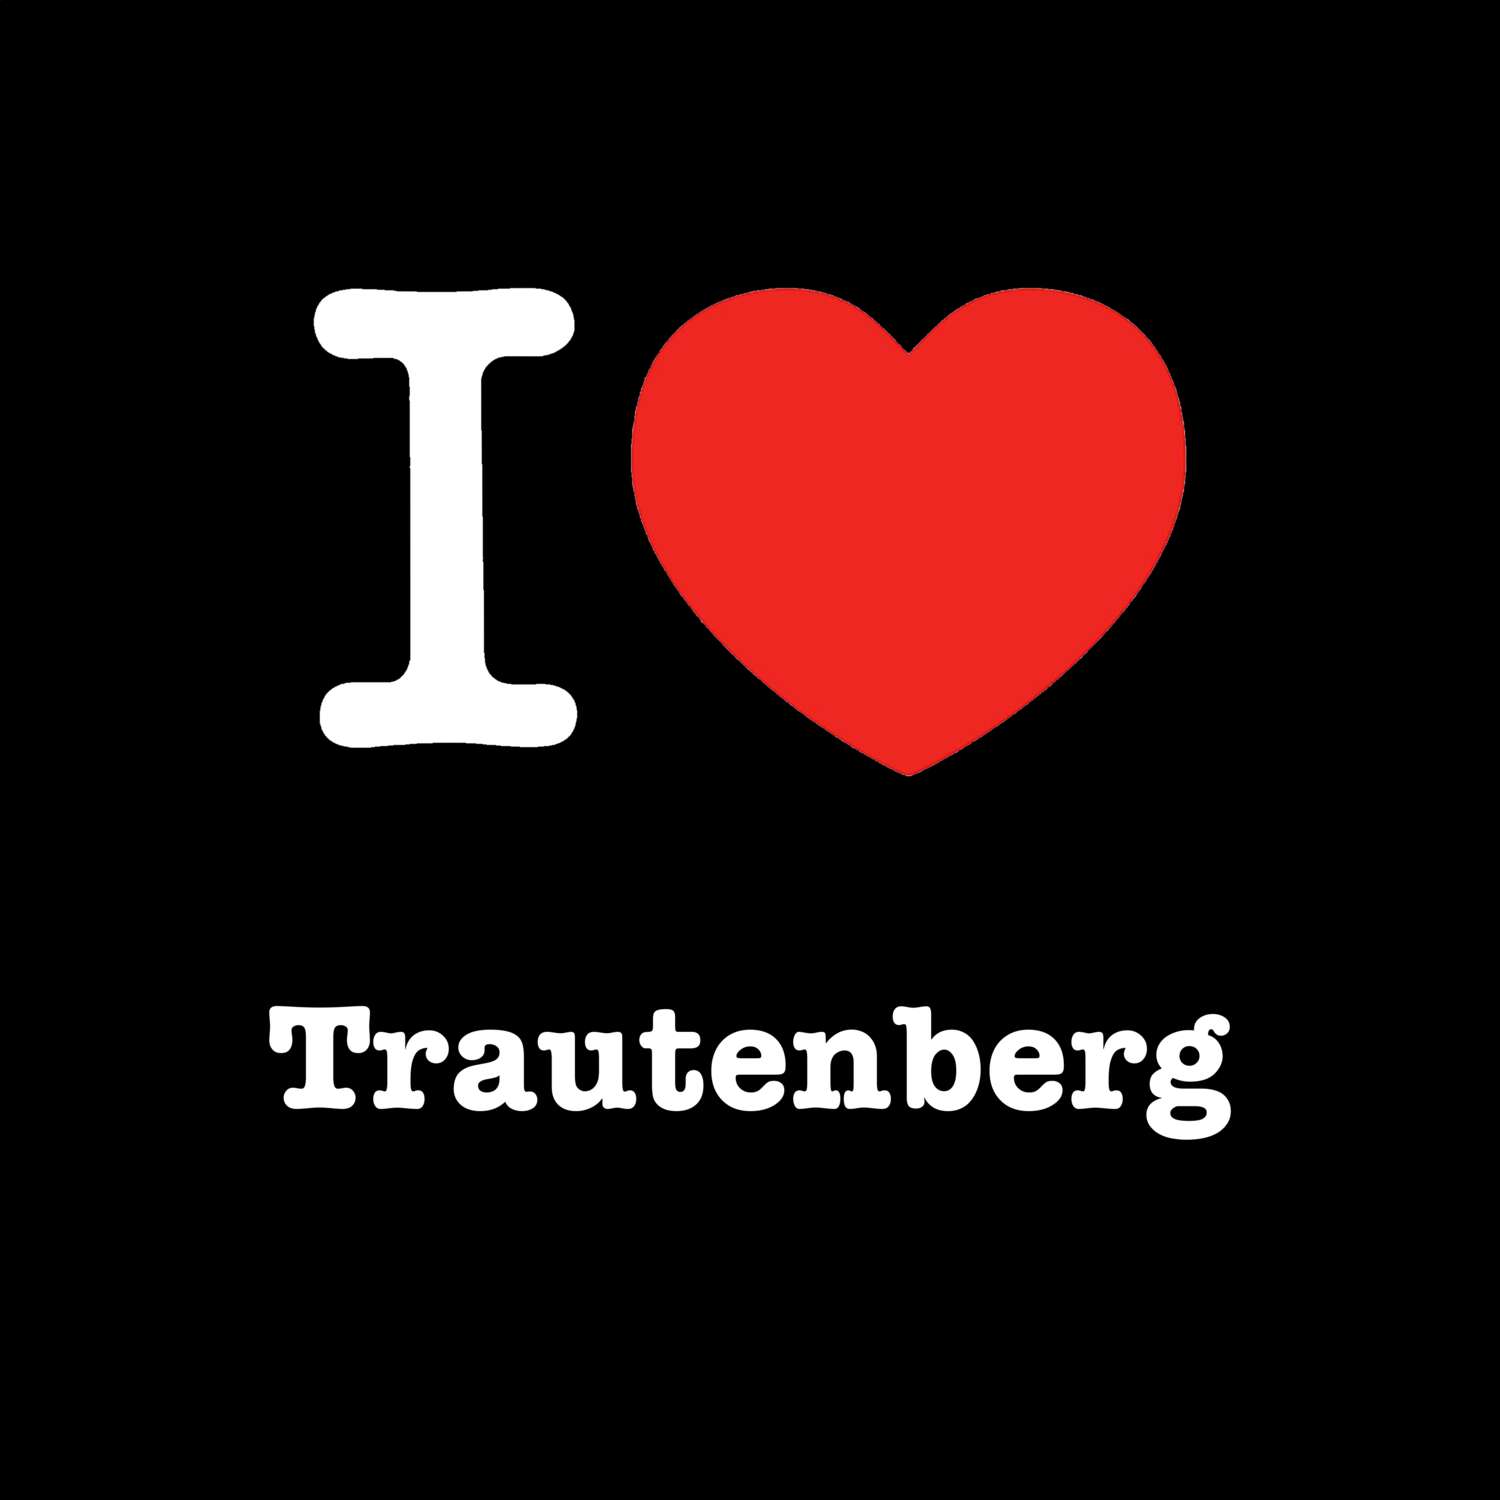 Trautenberg T-Shirt »I love«